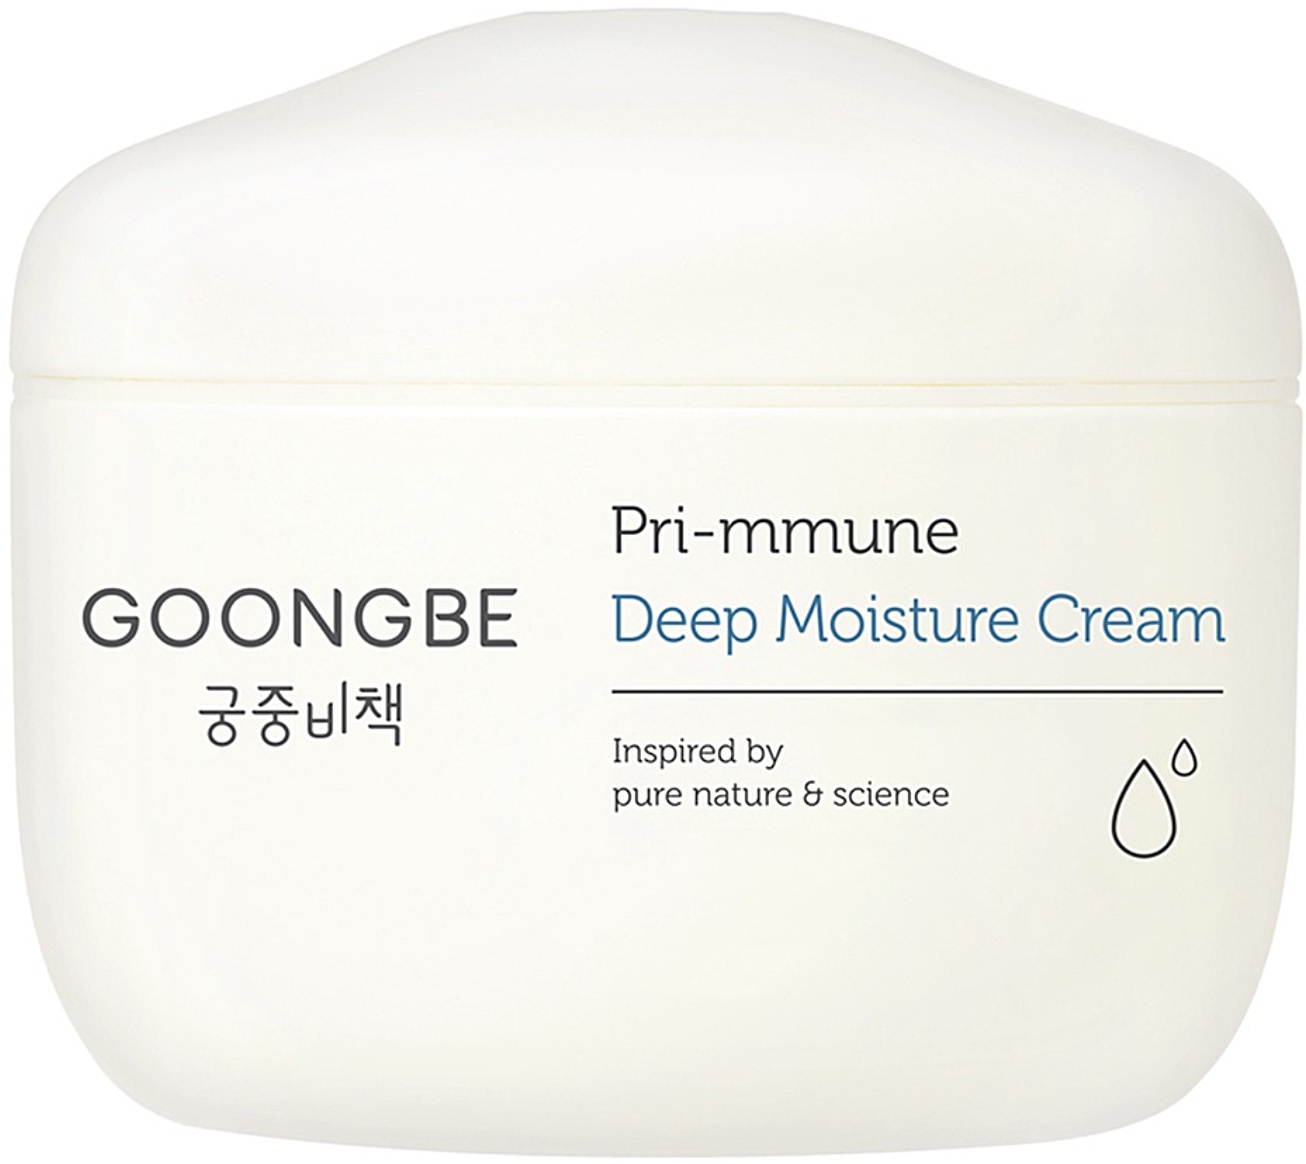 Goongbe Pri-mmune Deep Moisture Cream